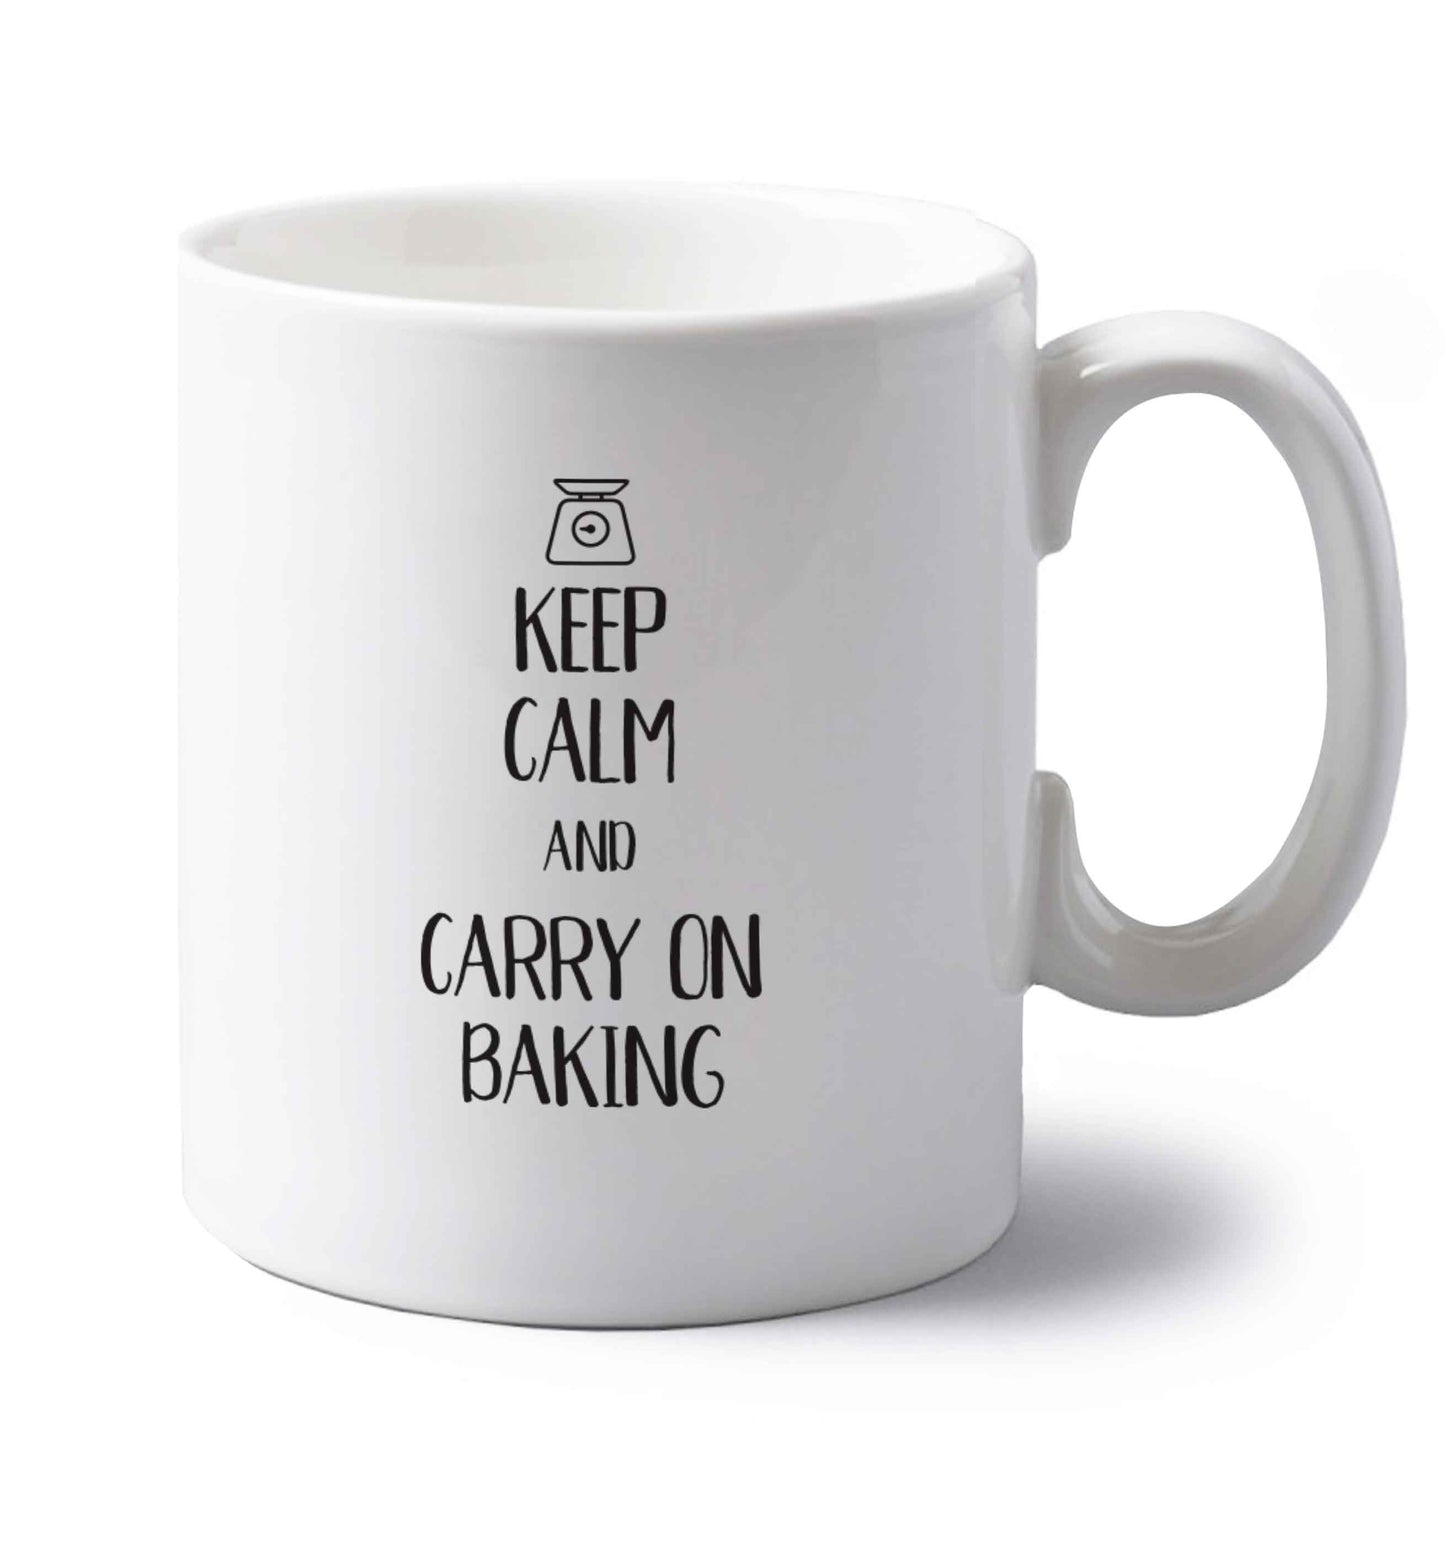 Keep calm and carry on baking left handed white ceramic mug 